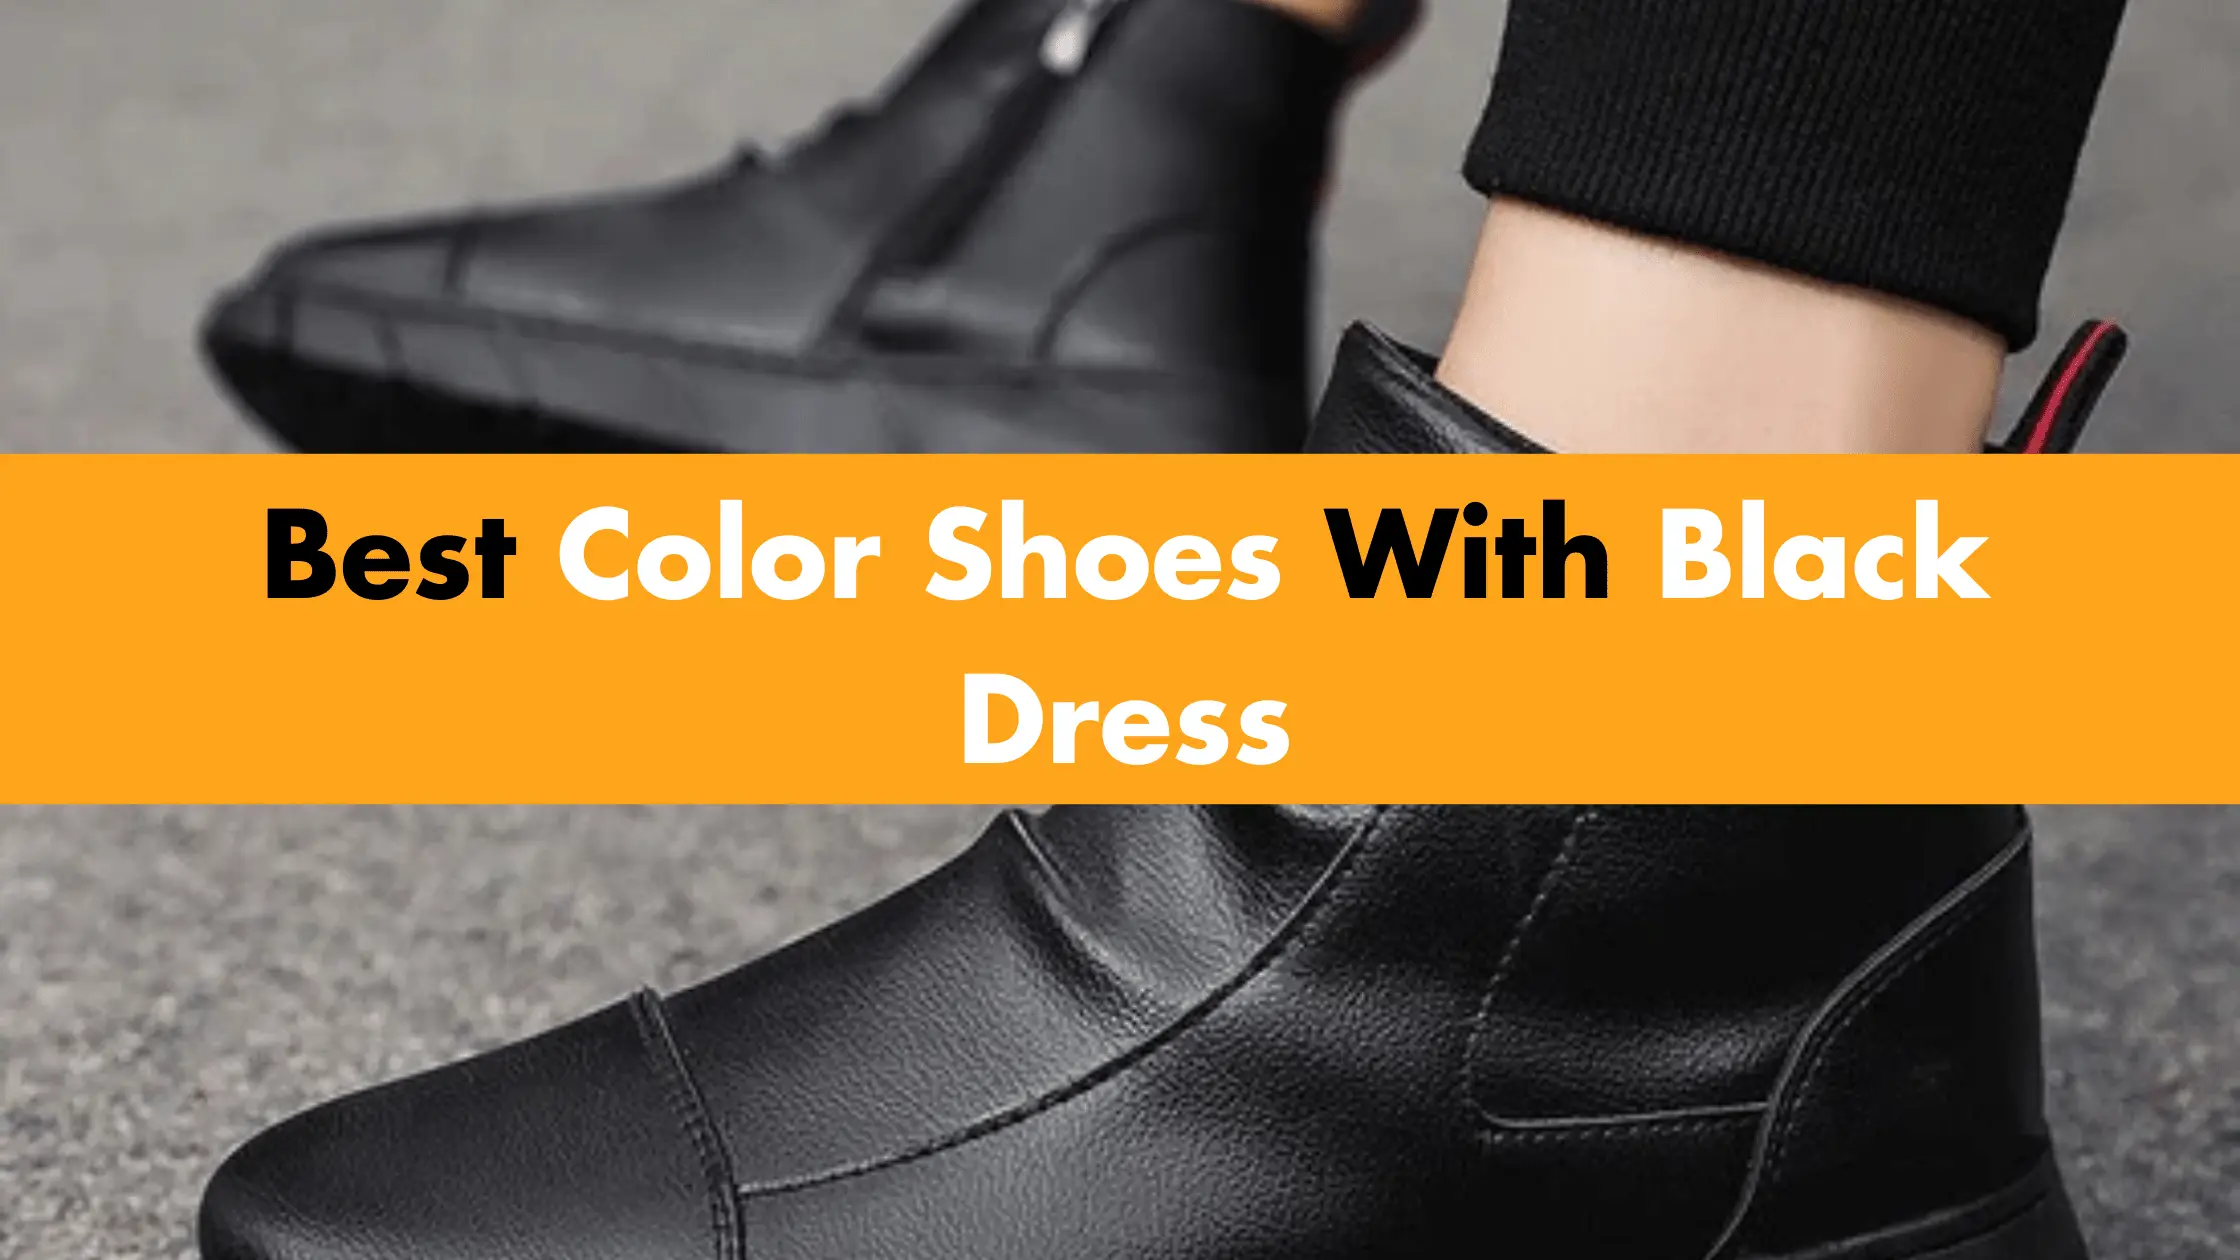 Best Color Shoes With Black Dress